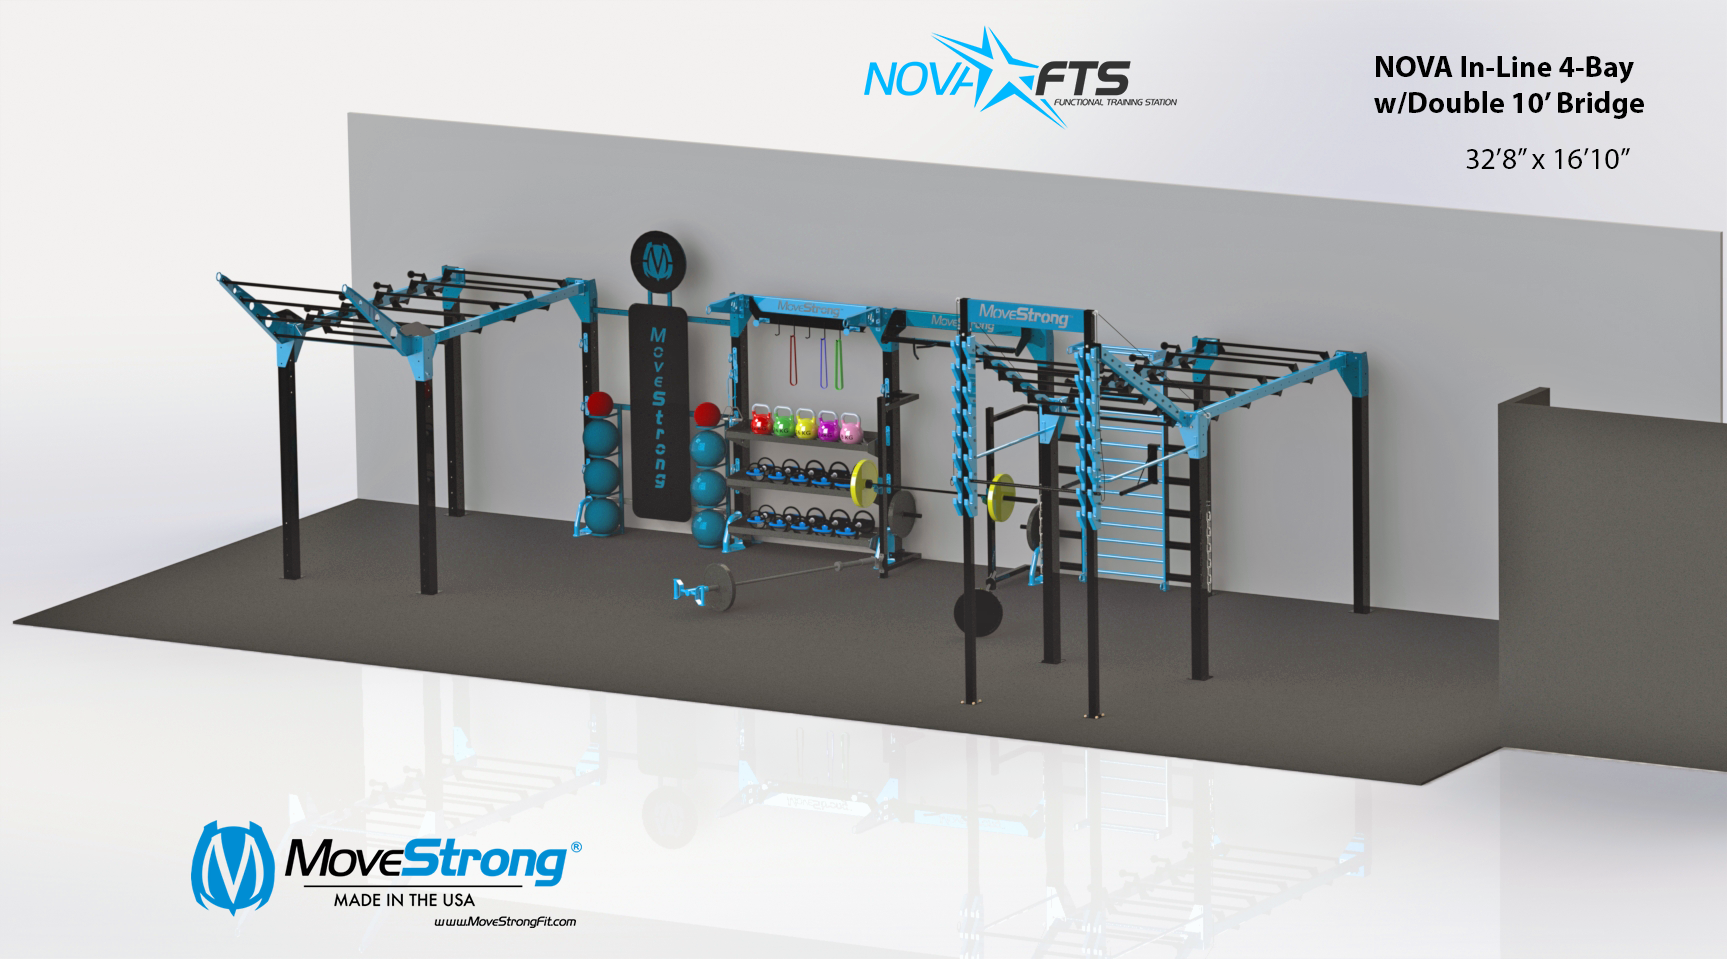 Nova 4-bay-in-line-dual Bridge_Plant Based Fitness - 3.png